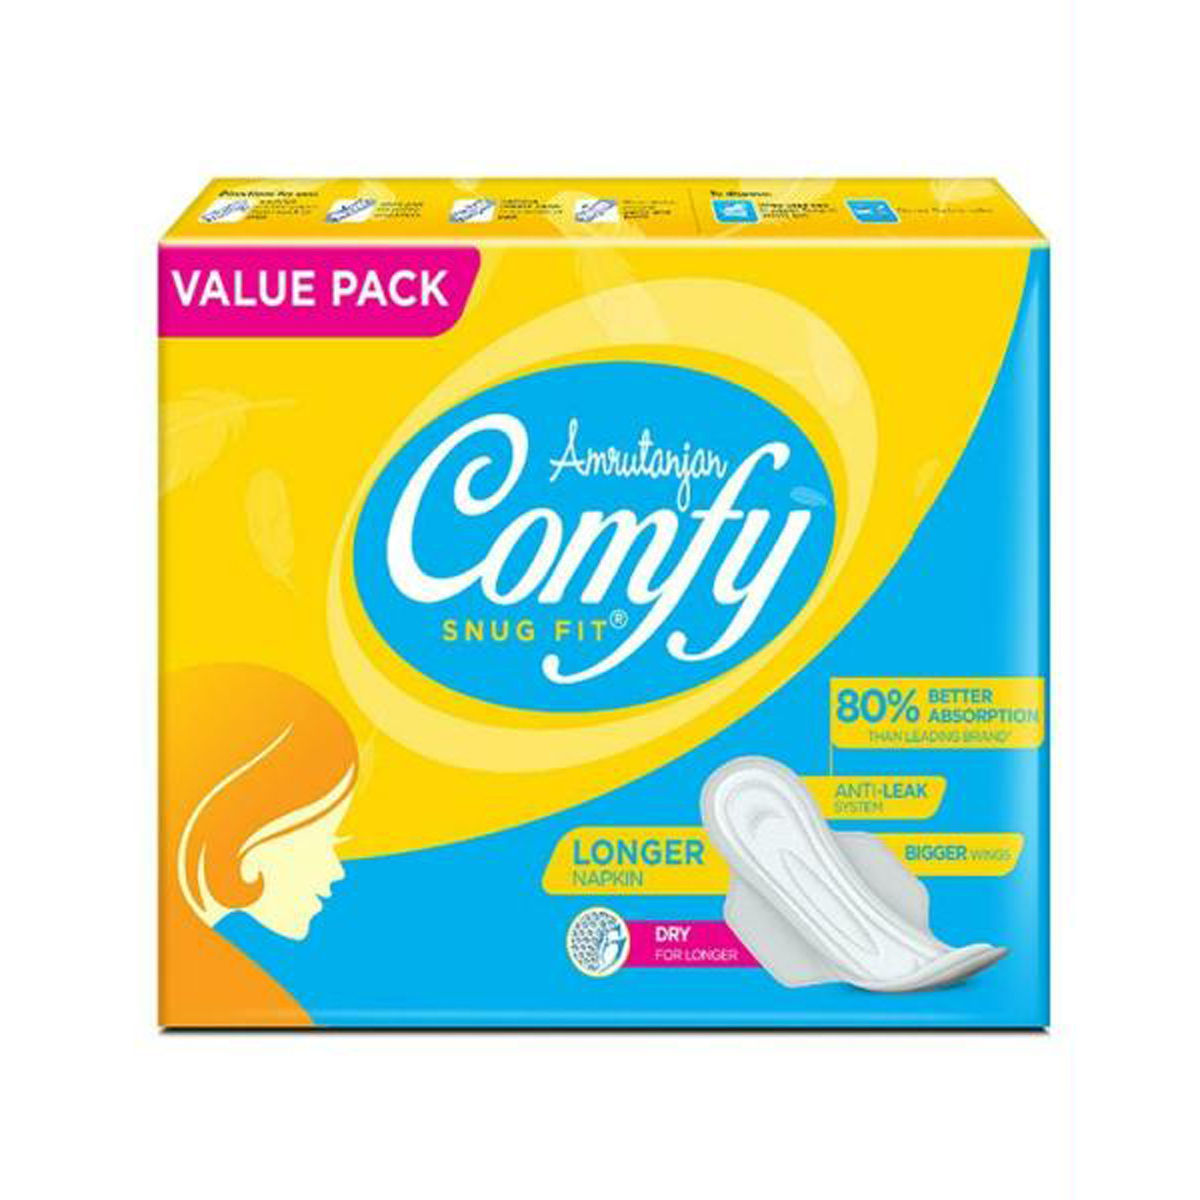 Amrutanjan Comfy Snug Fit Longer Napkin Sanitary Pads, 18 Count, Pack of 1 